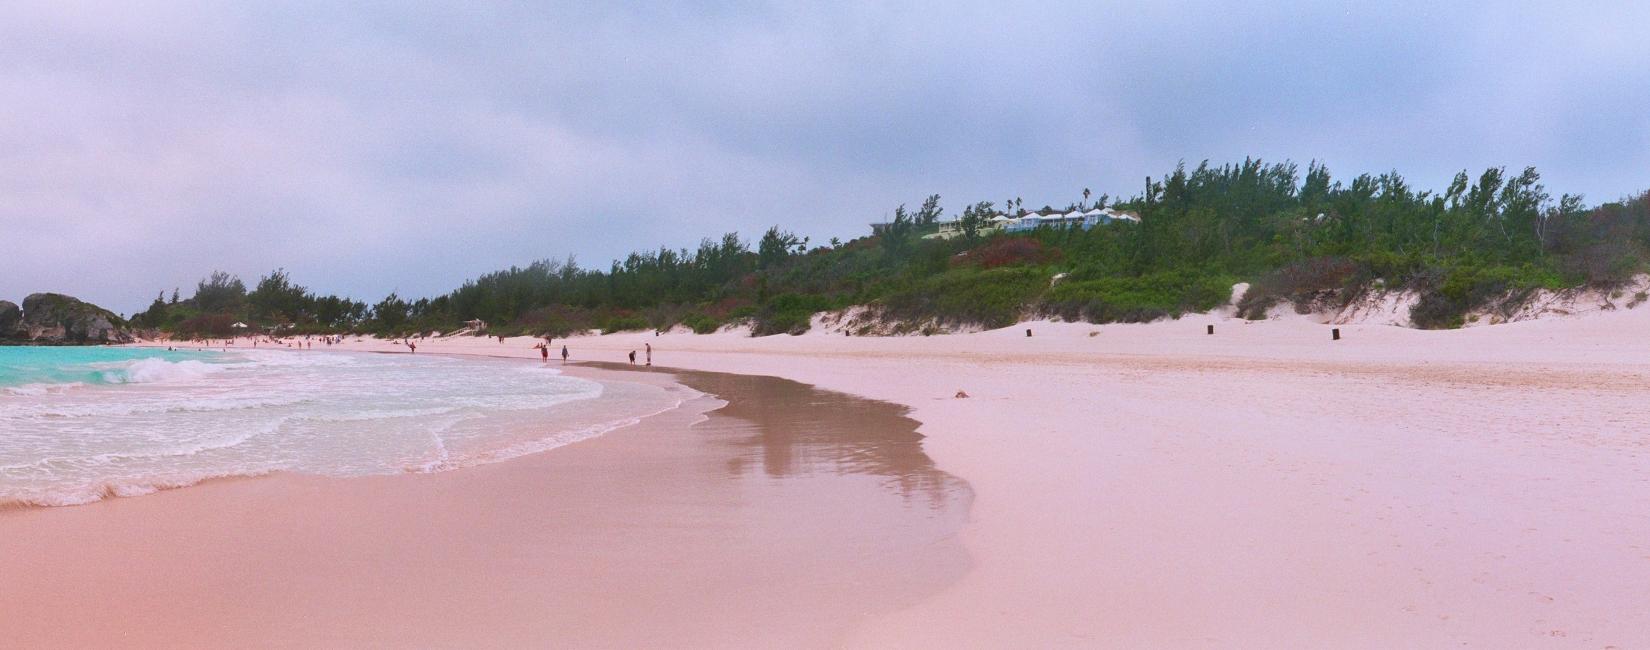 Sandee - Horseshoe Bay Beach